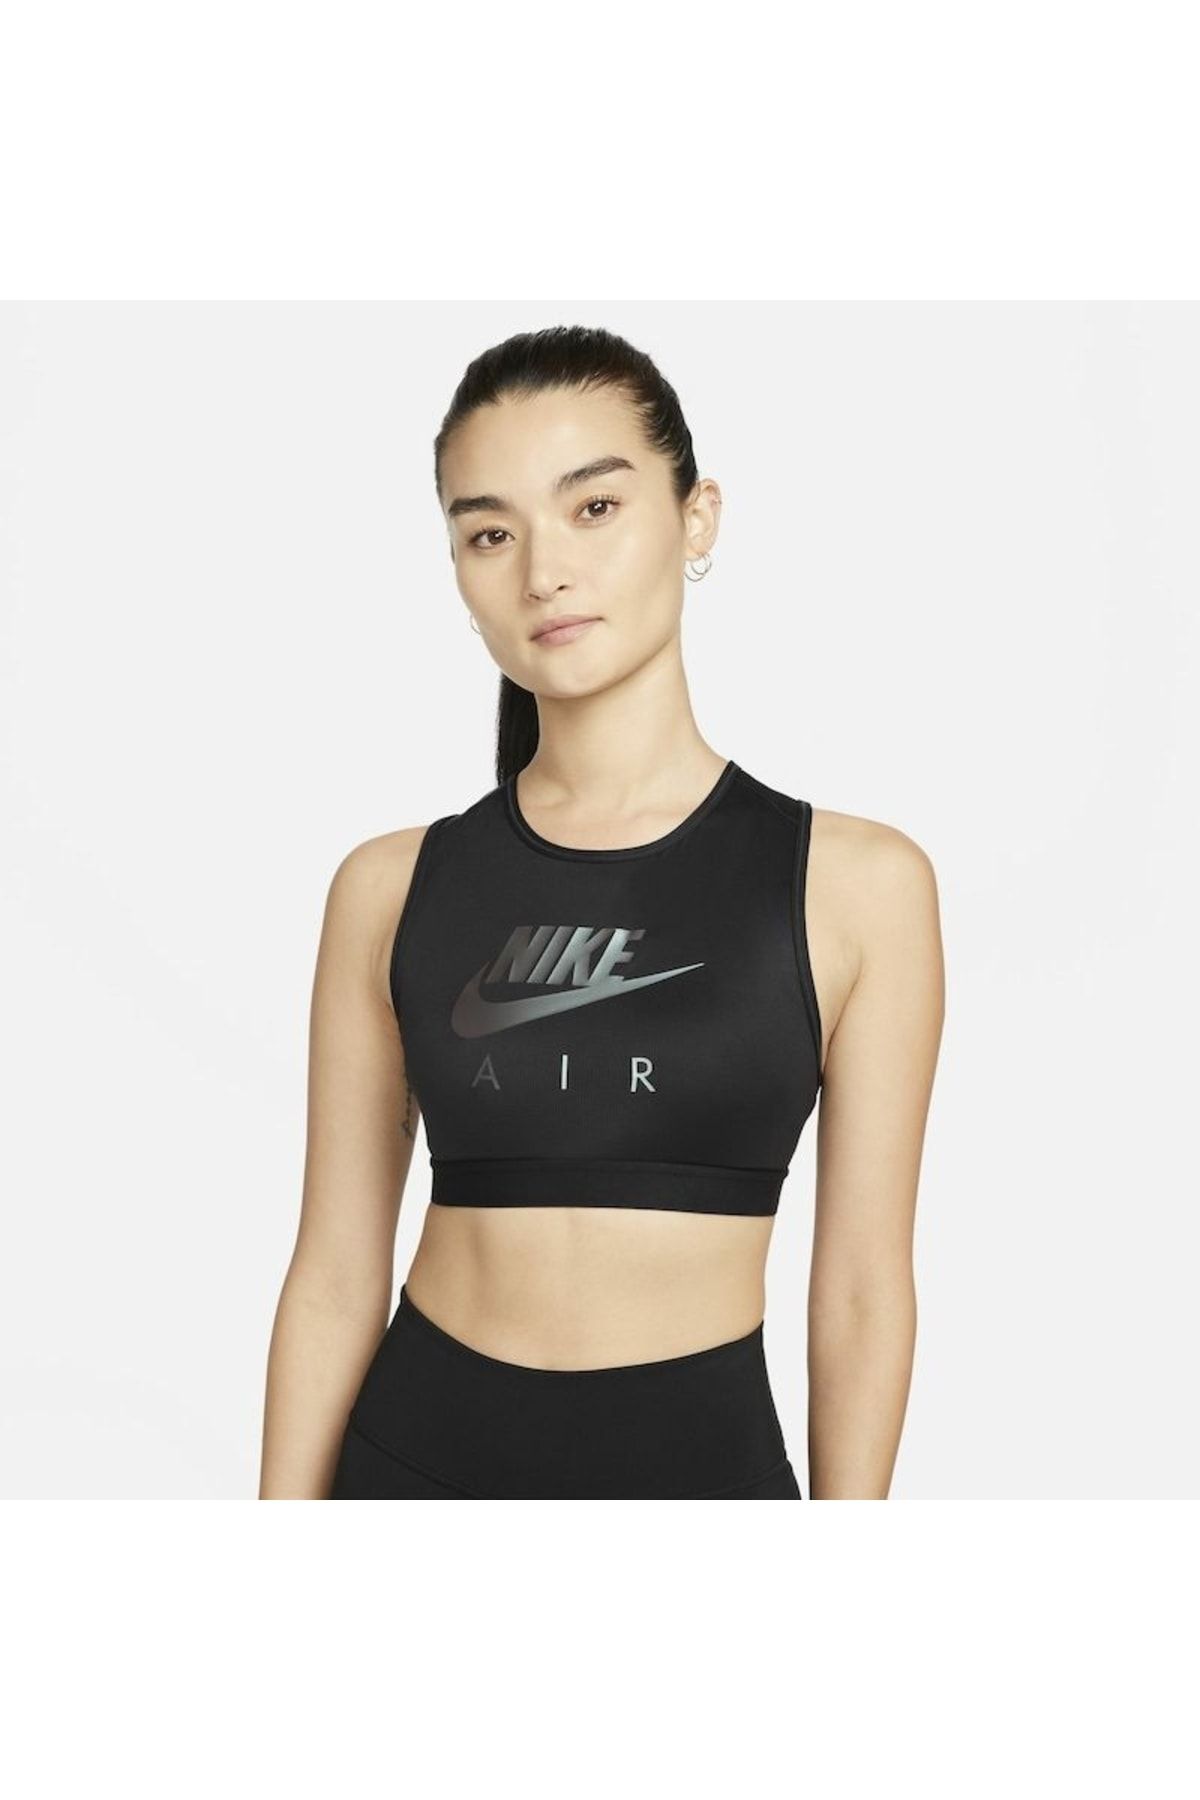 Nike Women's Swoosh High-Neck Sports Bra